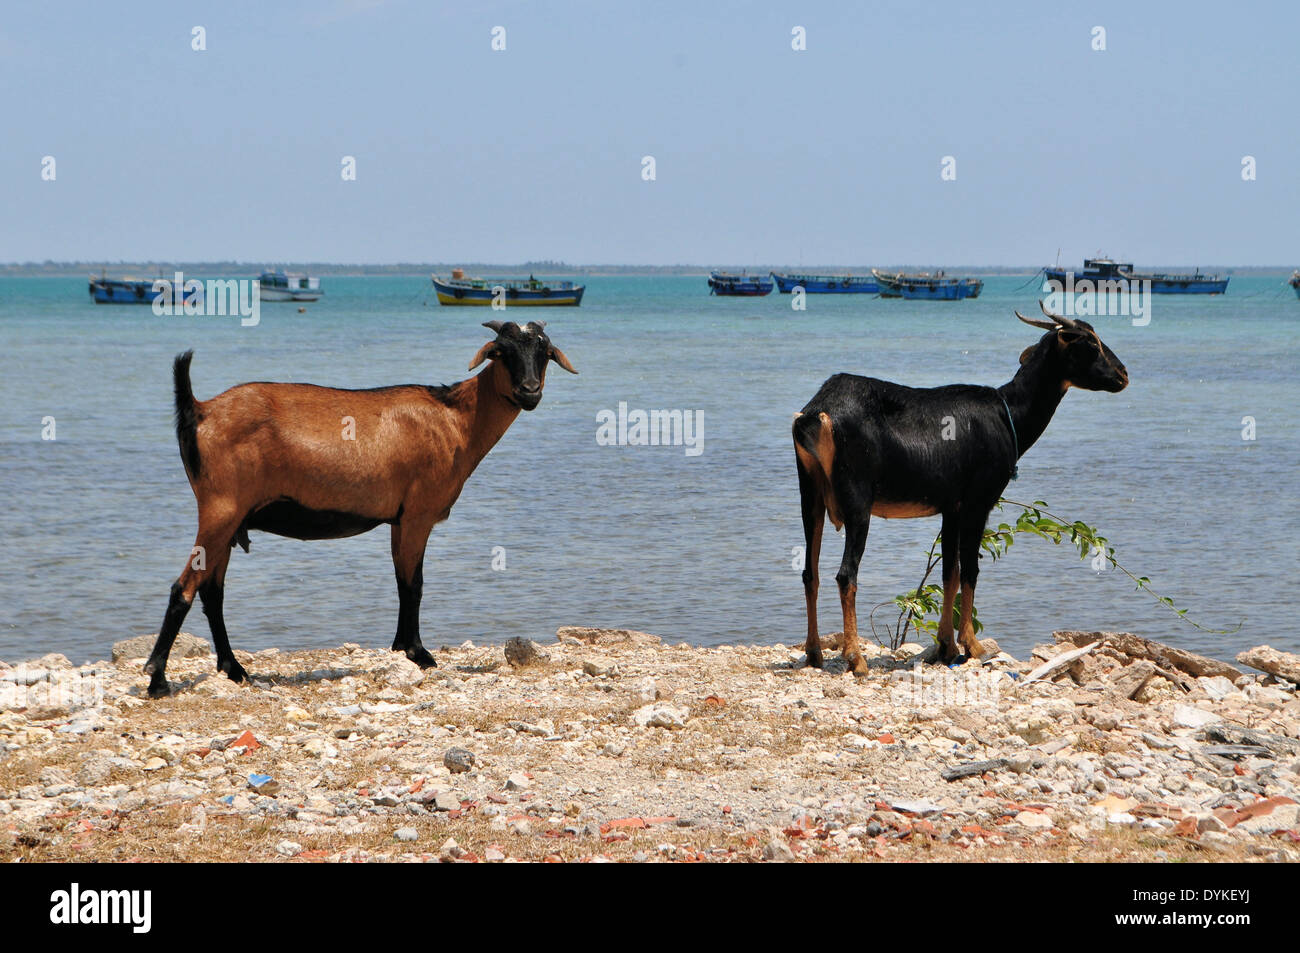 Sri Lankan Goats on island with fisherboats Stock Photo